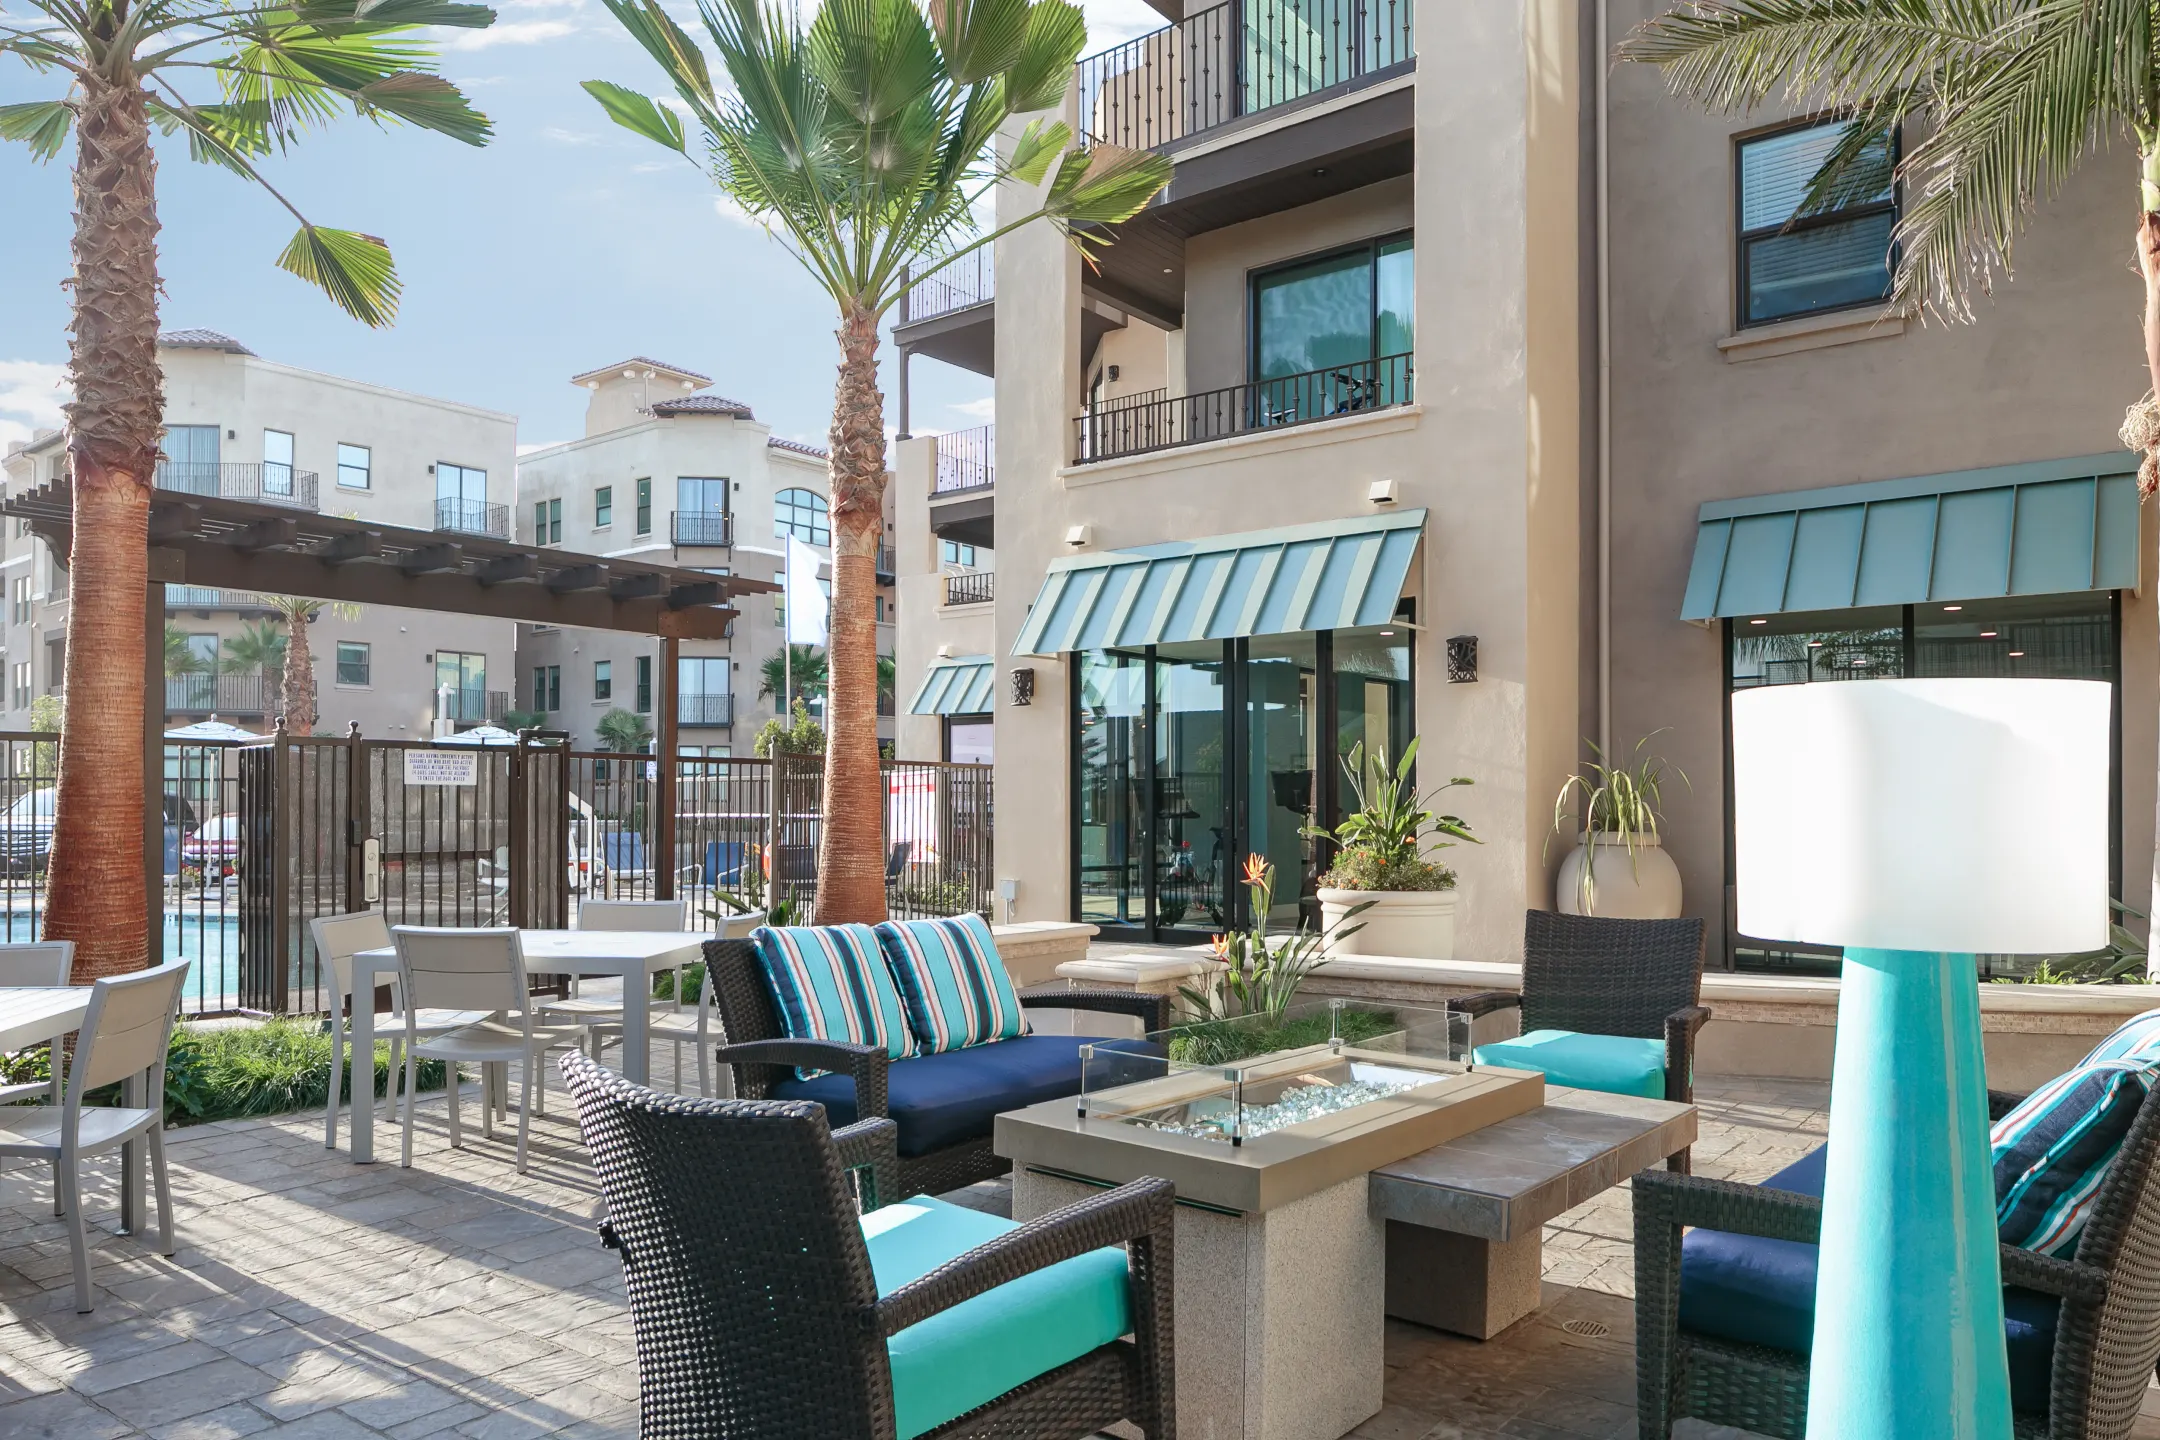 Island View Luxury Apartment Homes - Ventura, CA